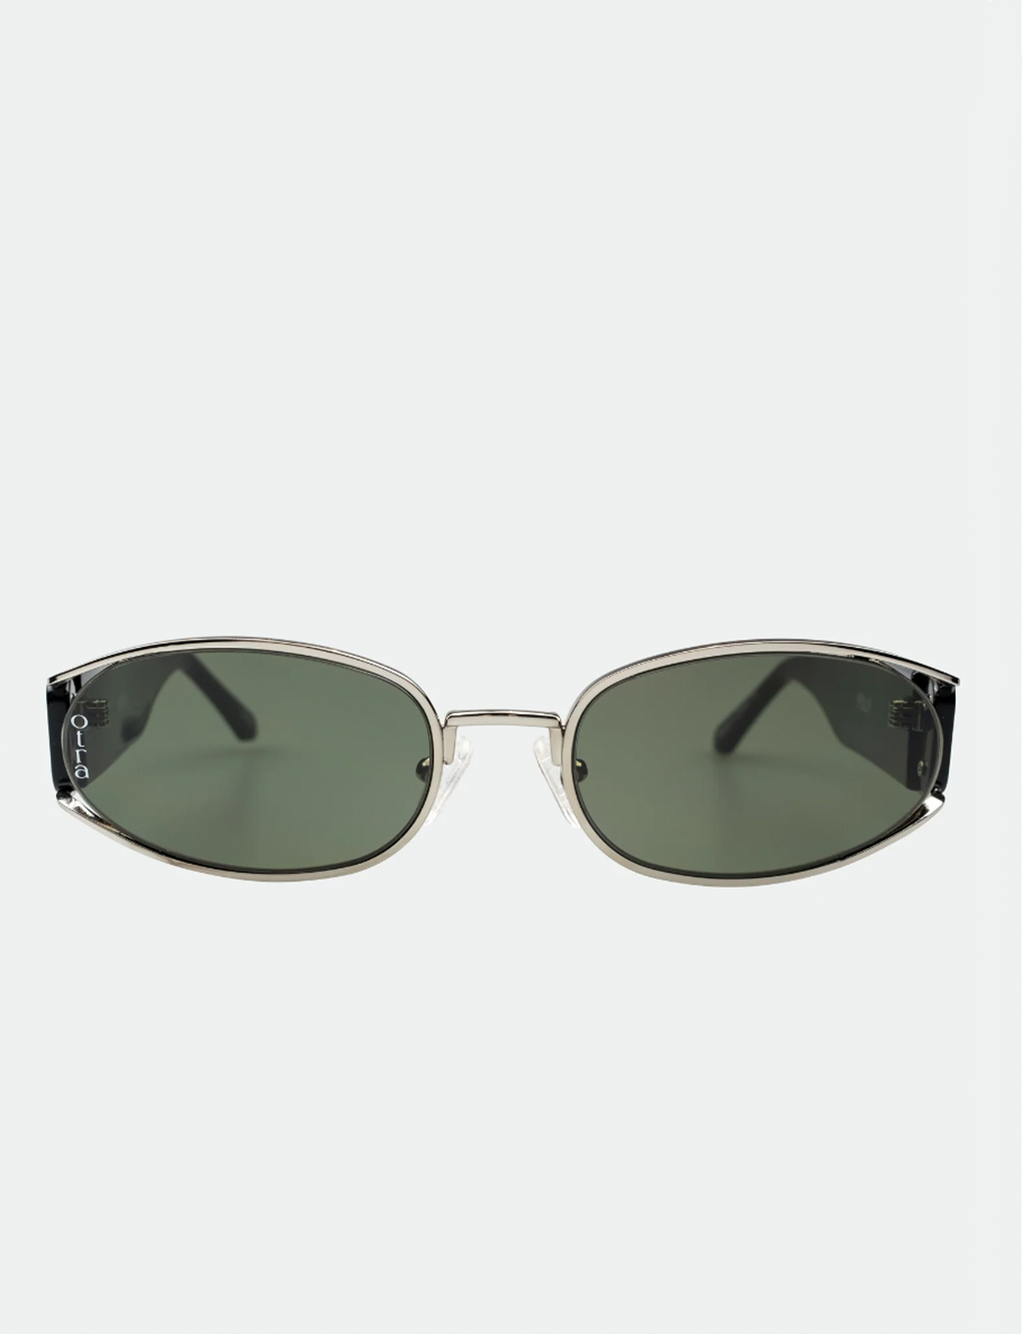 Polly Sunglasses, Silver Black/Green